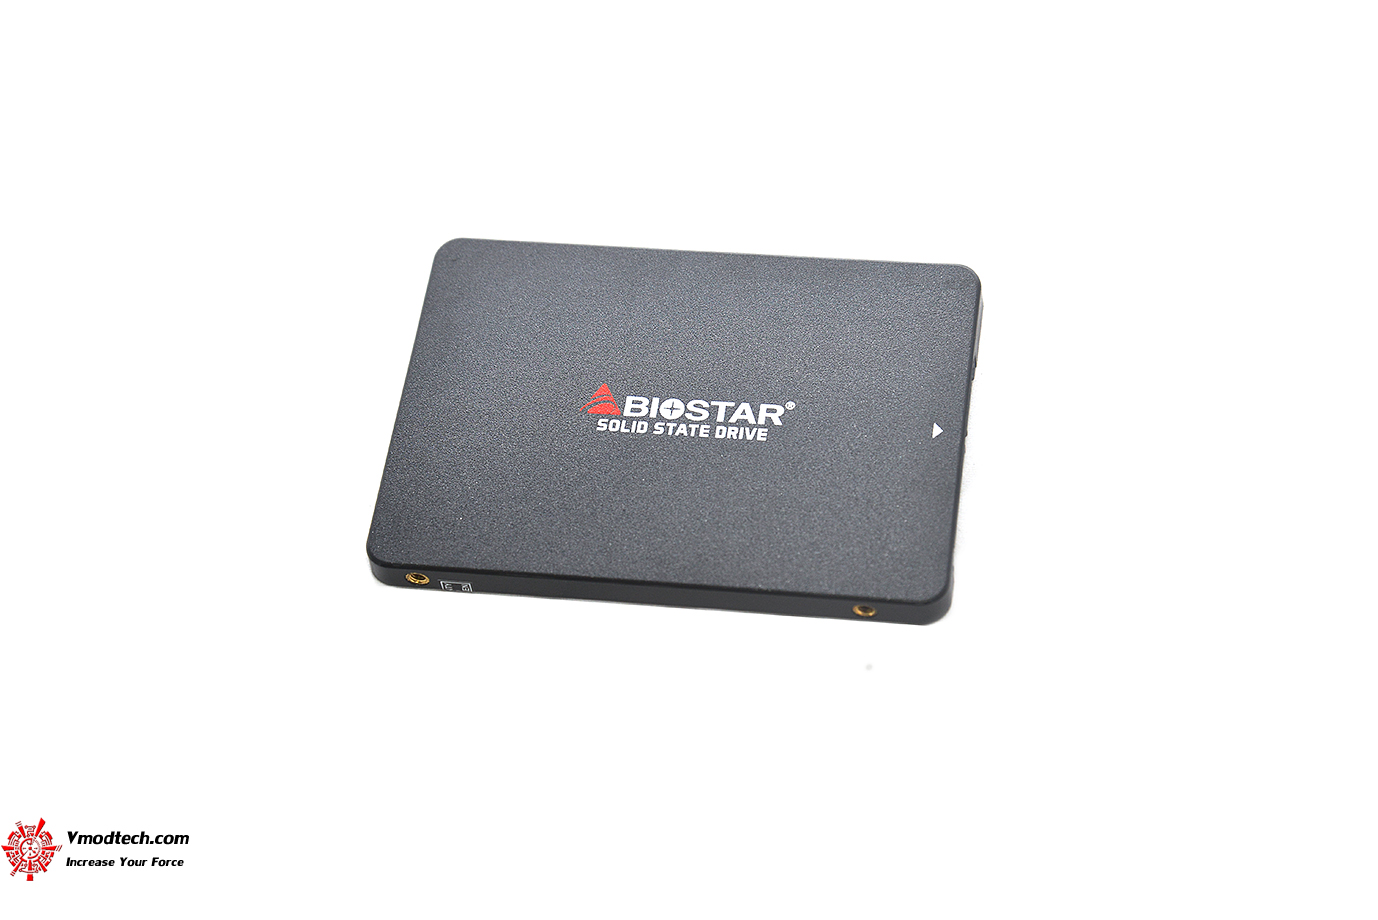 dsc 9923 Biostar SSD S130 512GB Review